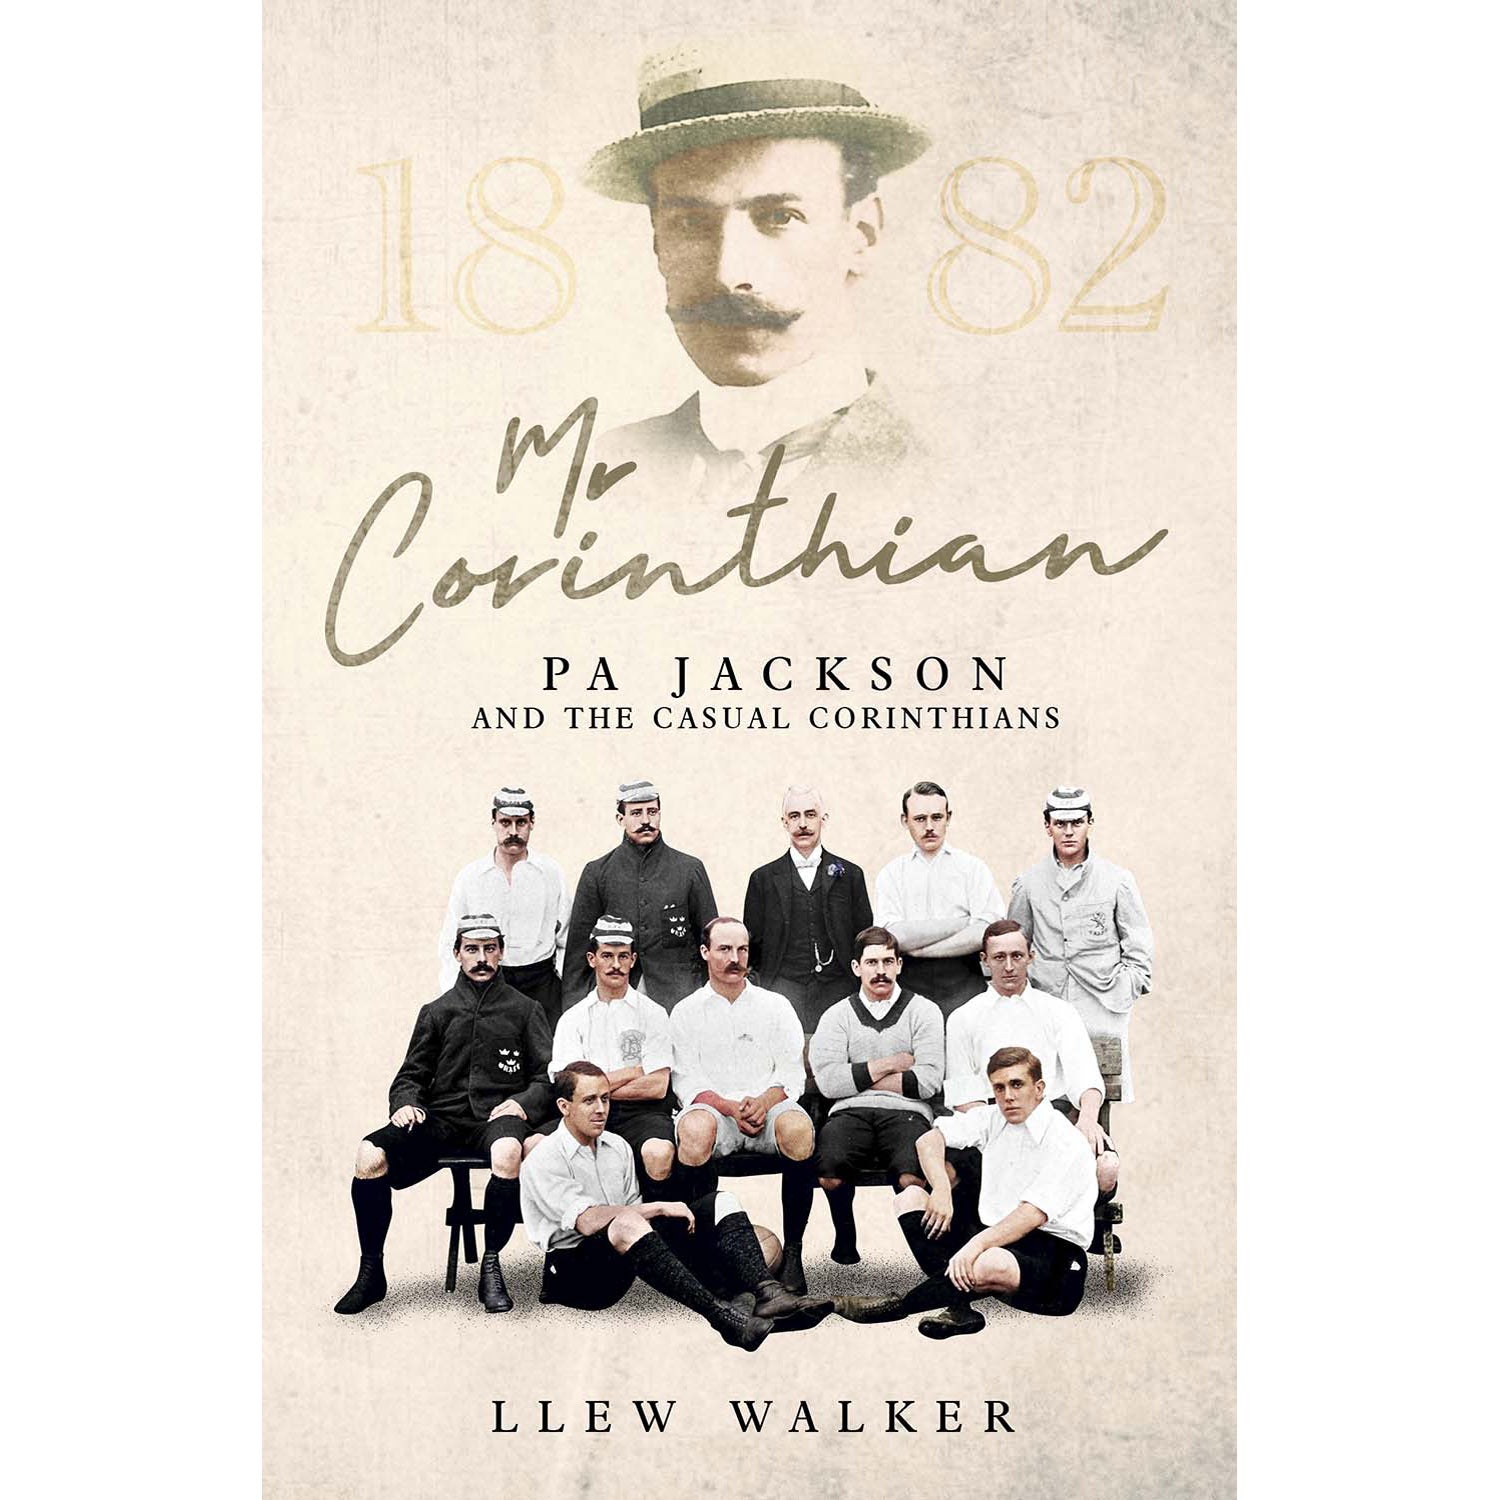 Mr Corinthian – Pa Jackson and the Casual Corinthians